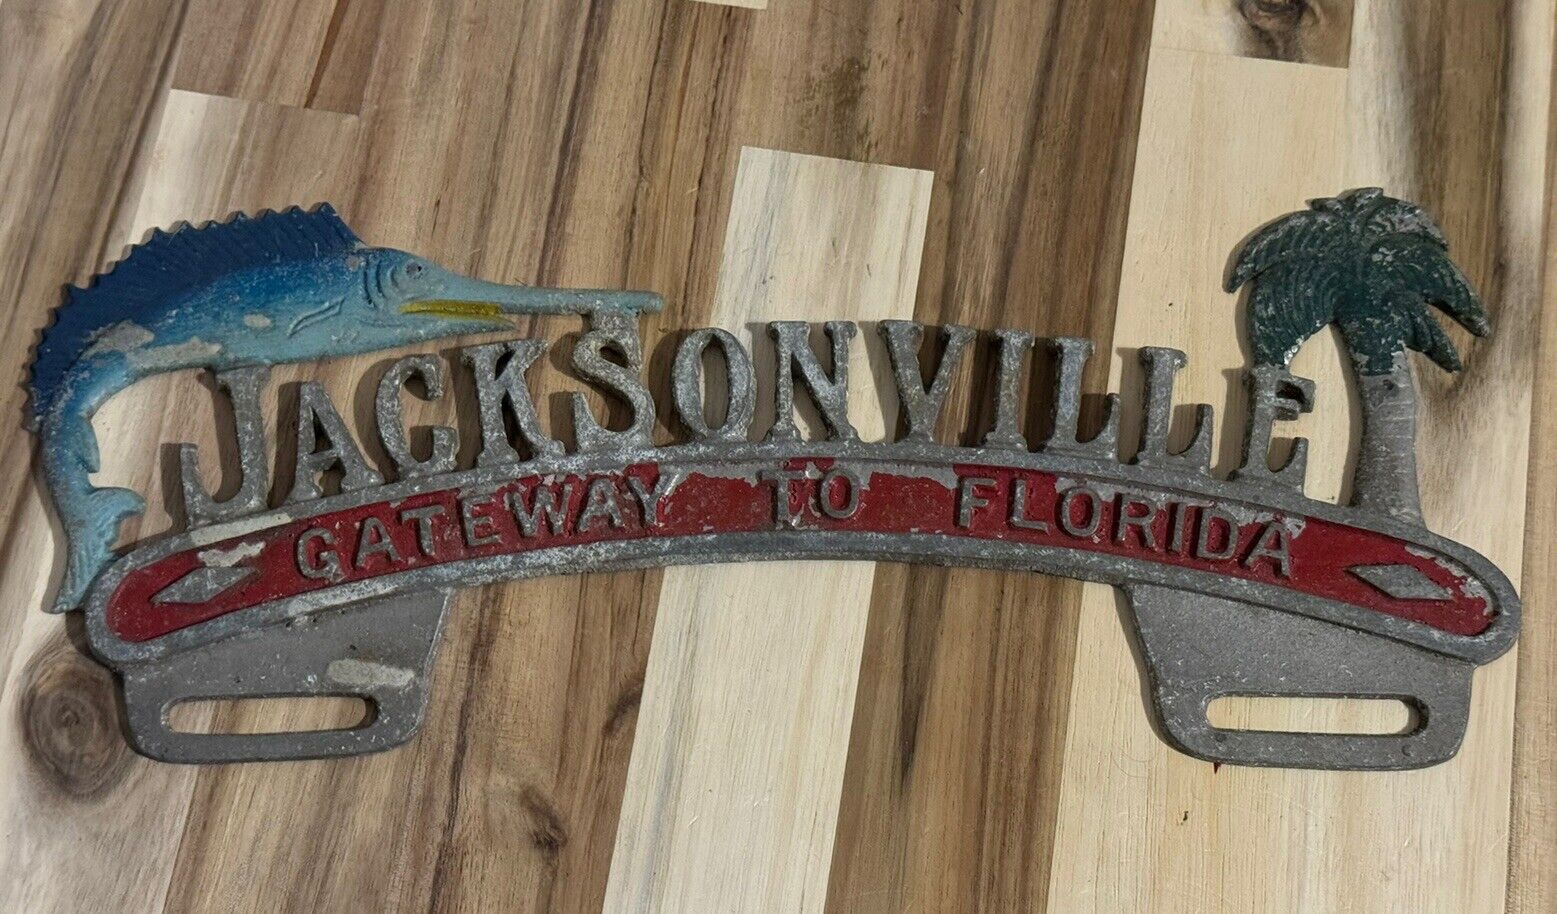 Rare Vintage Jacksonville Gateway To Florida License Plate Topper Aluminum